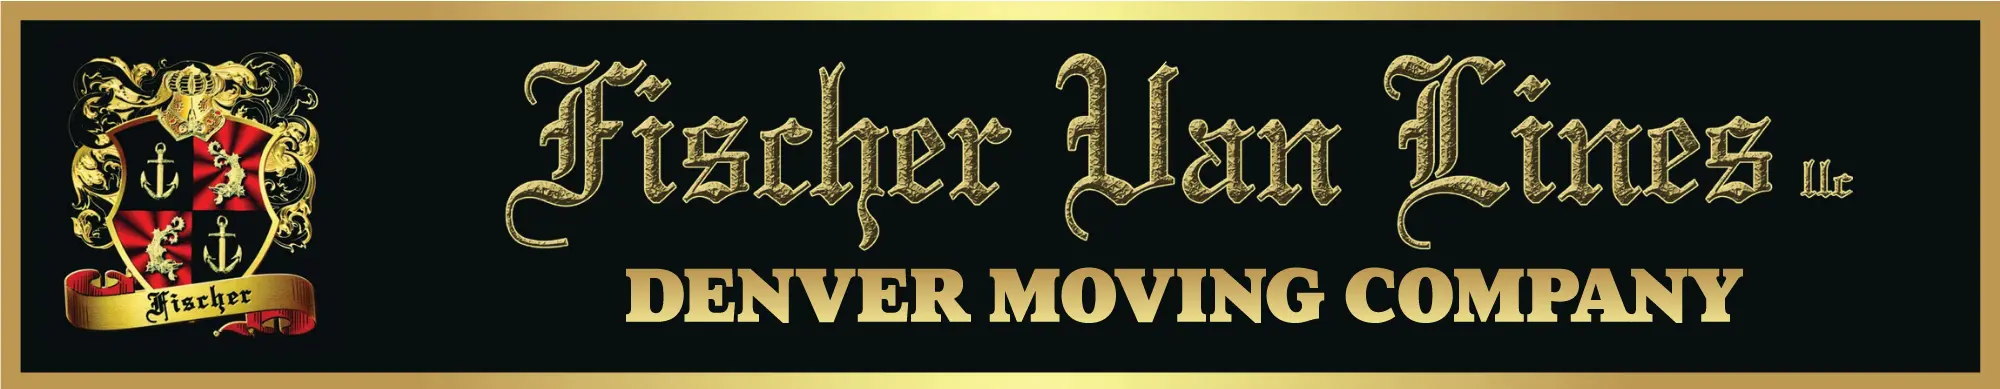 Fischer Van Lines Company Logo, a Denver Moving Company